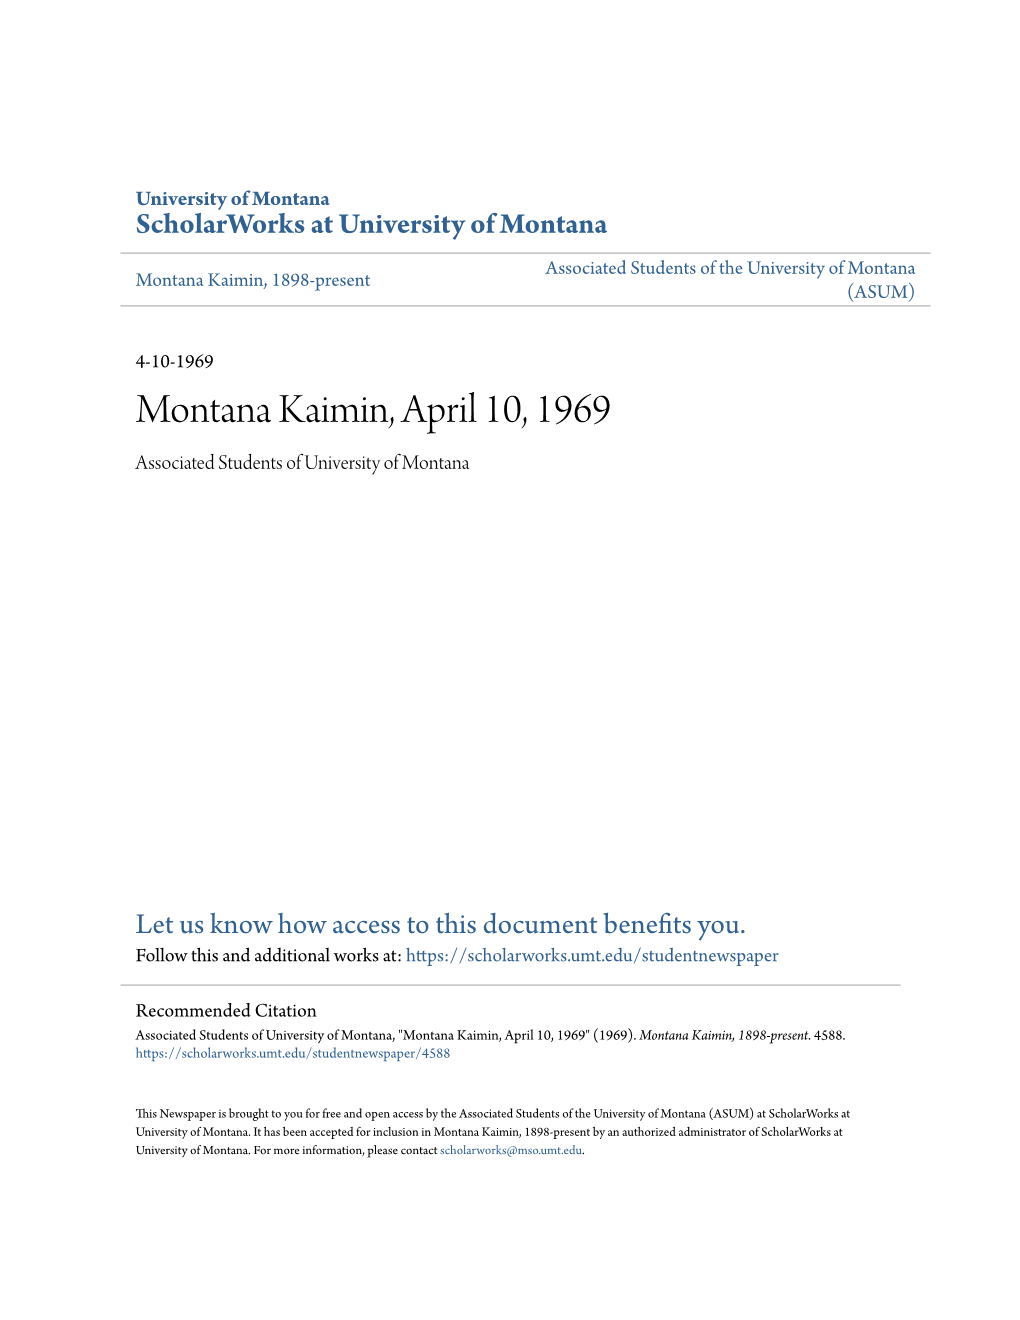 Montana Kaimin, April 10, 1969 Associated Students of University of Montana